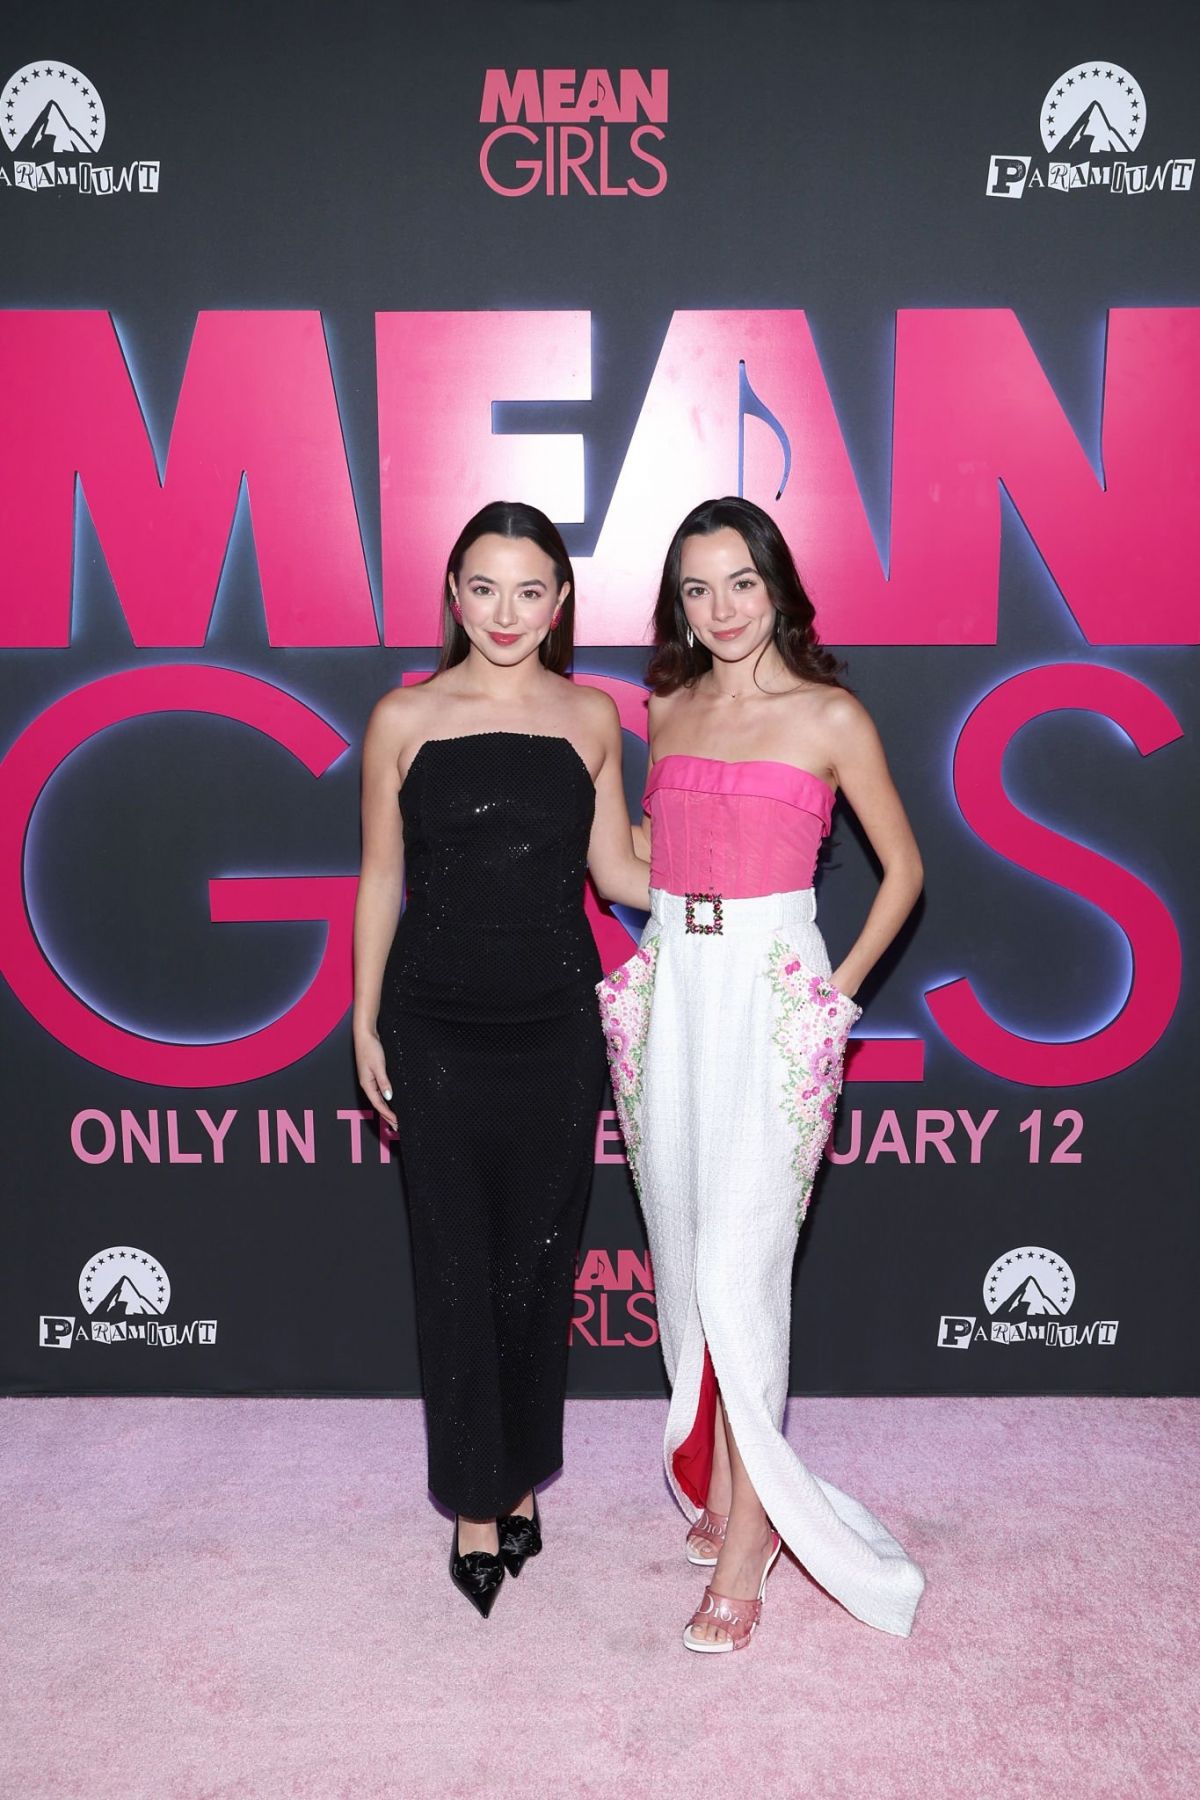 Vanessa and Veronica Merrell stun at Mean Girls screening in LA